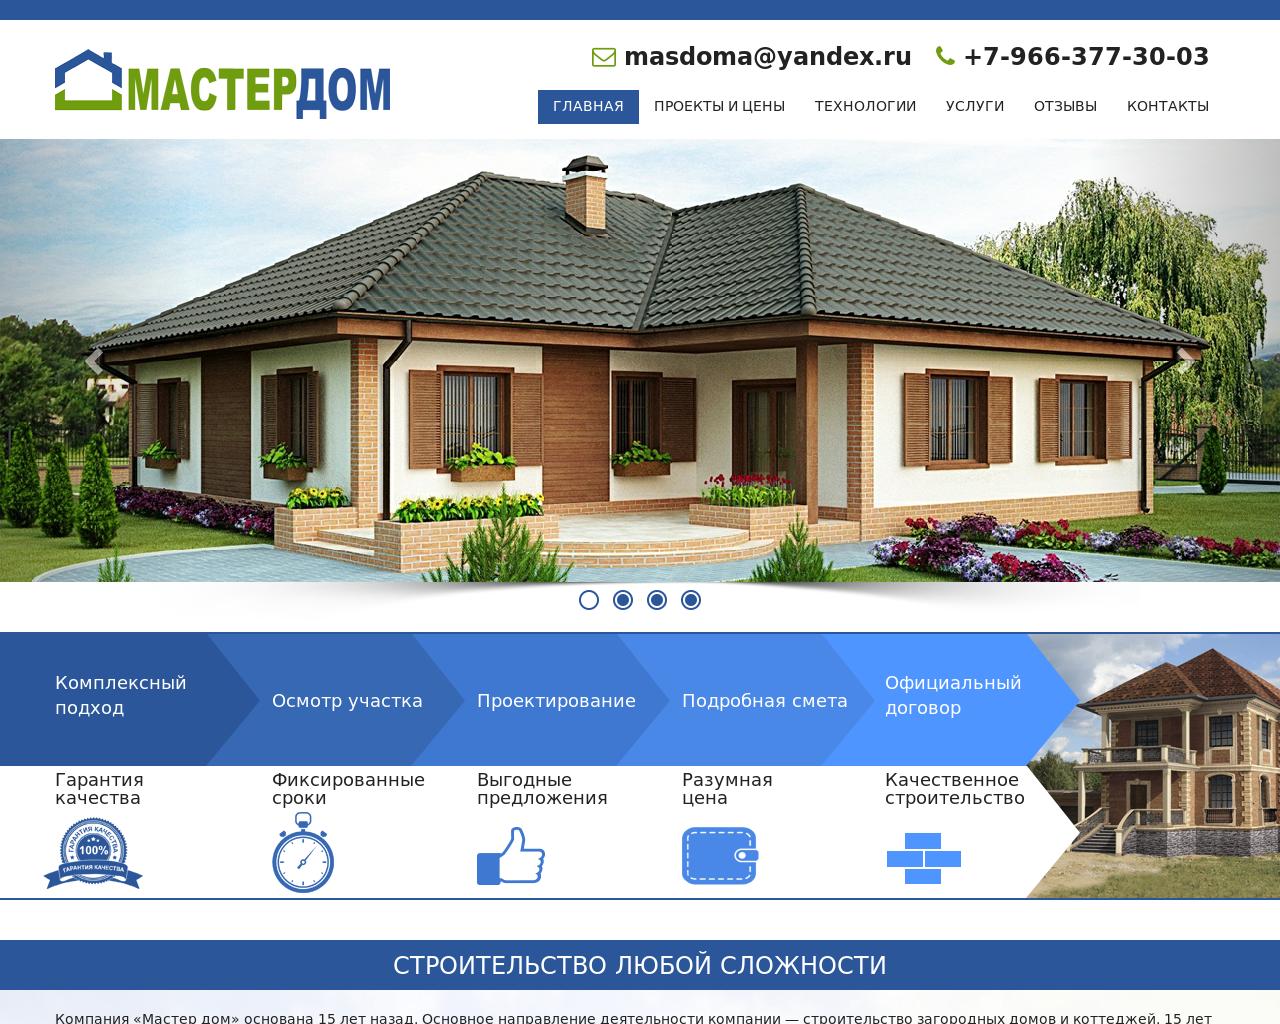 Изображение сайта md-msk.ru в разрешении 1280x1024